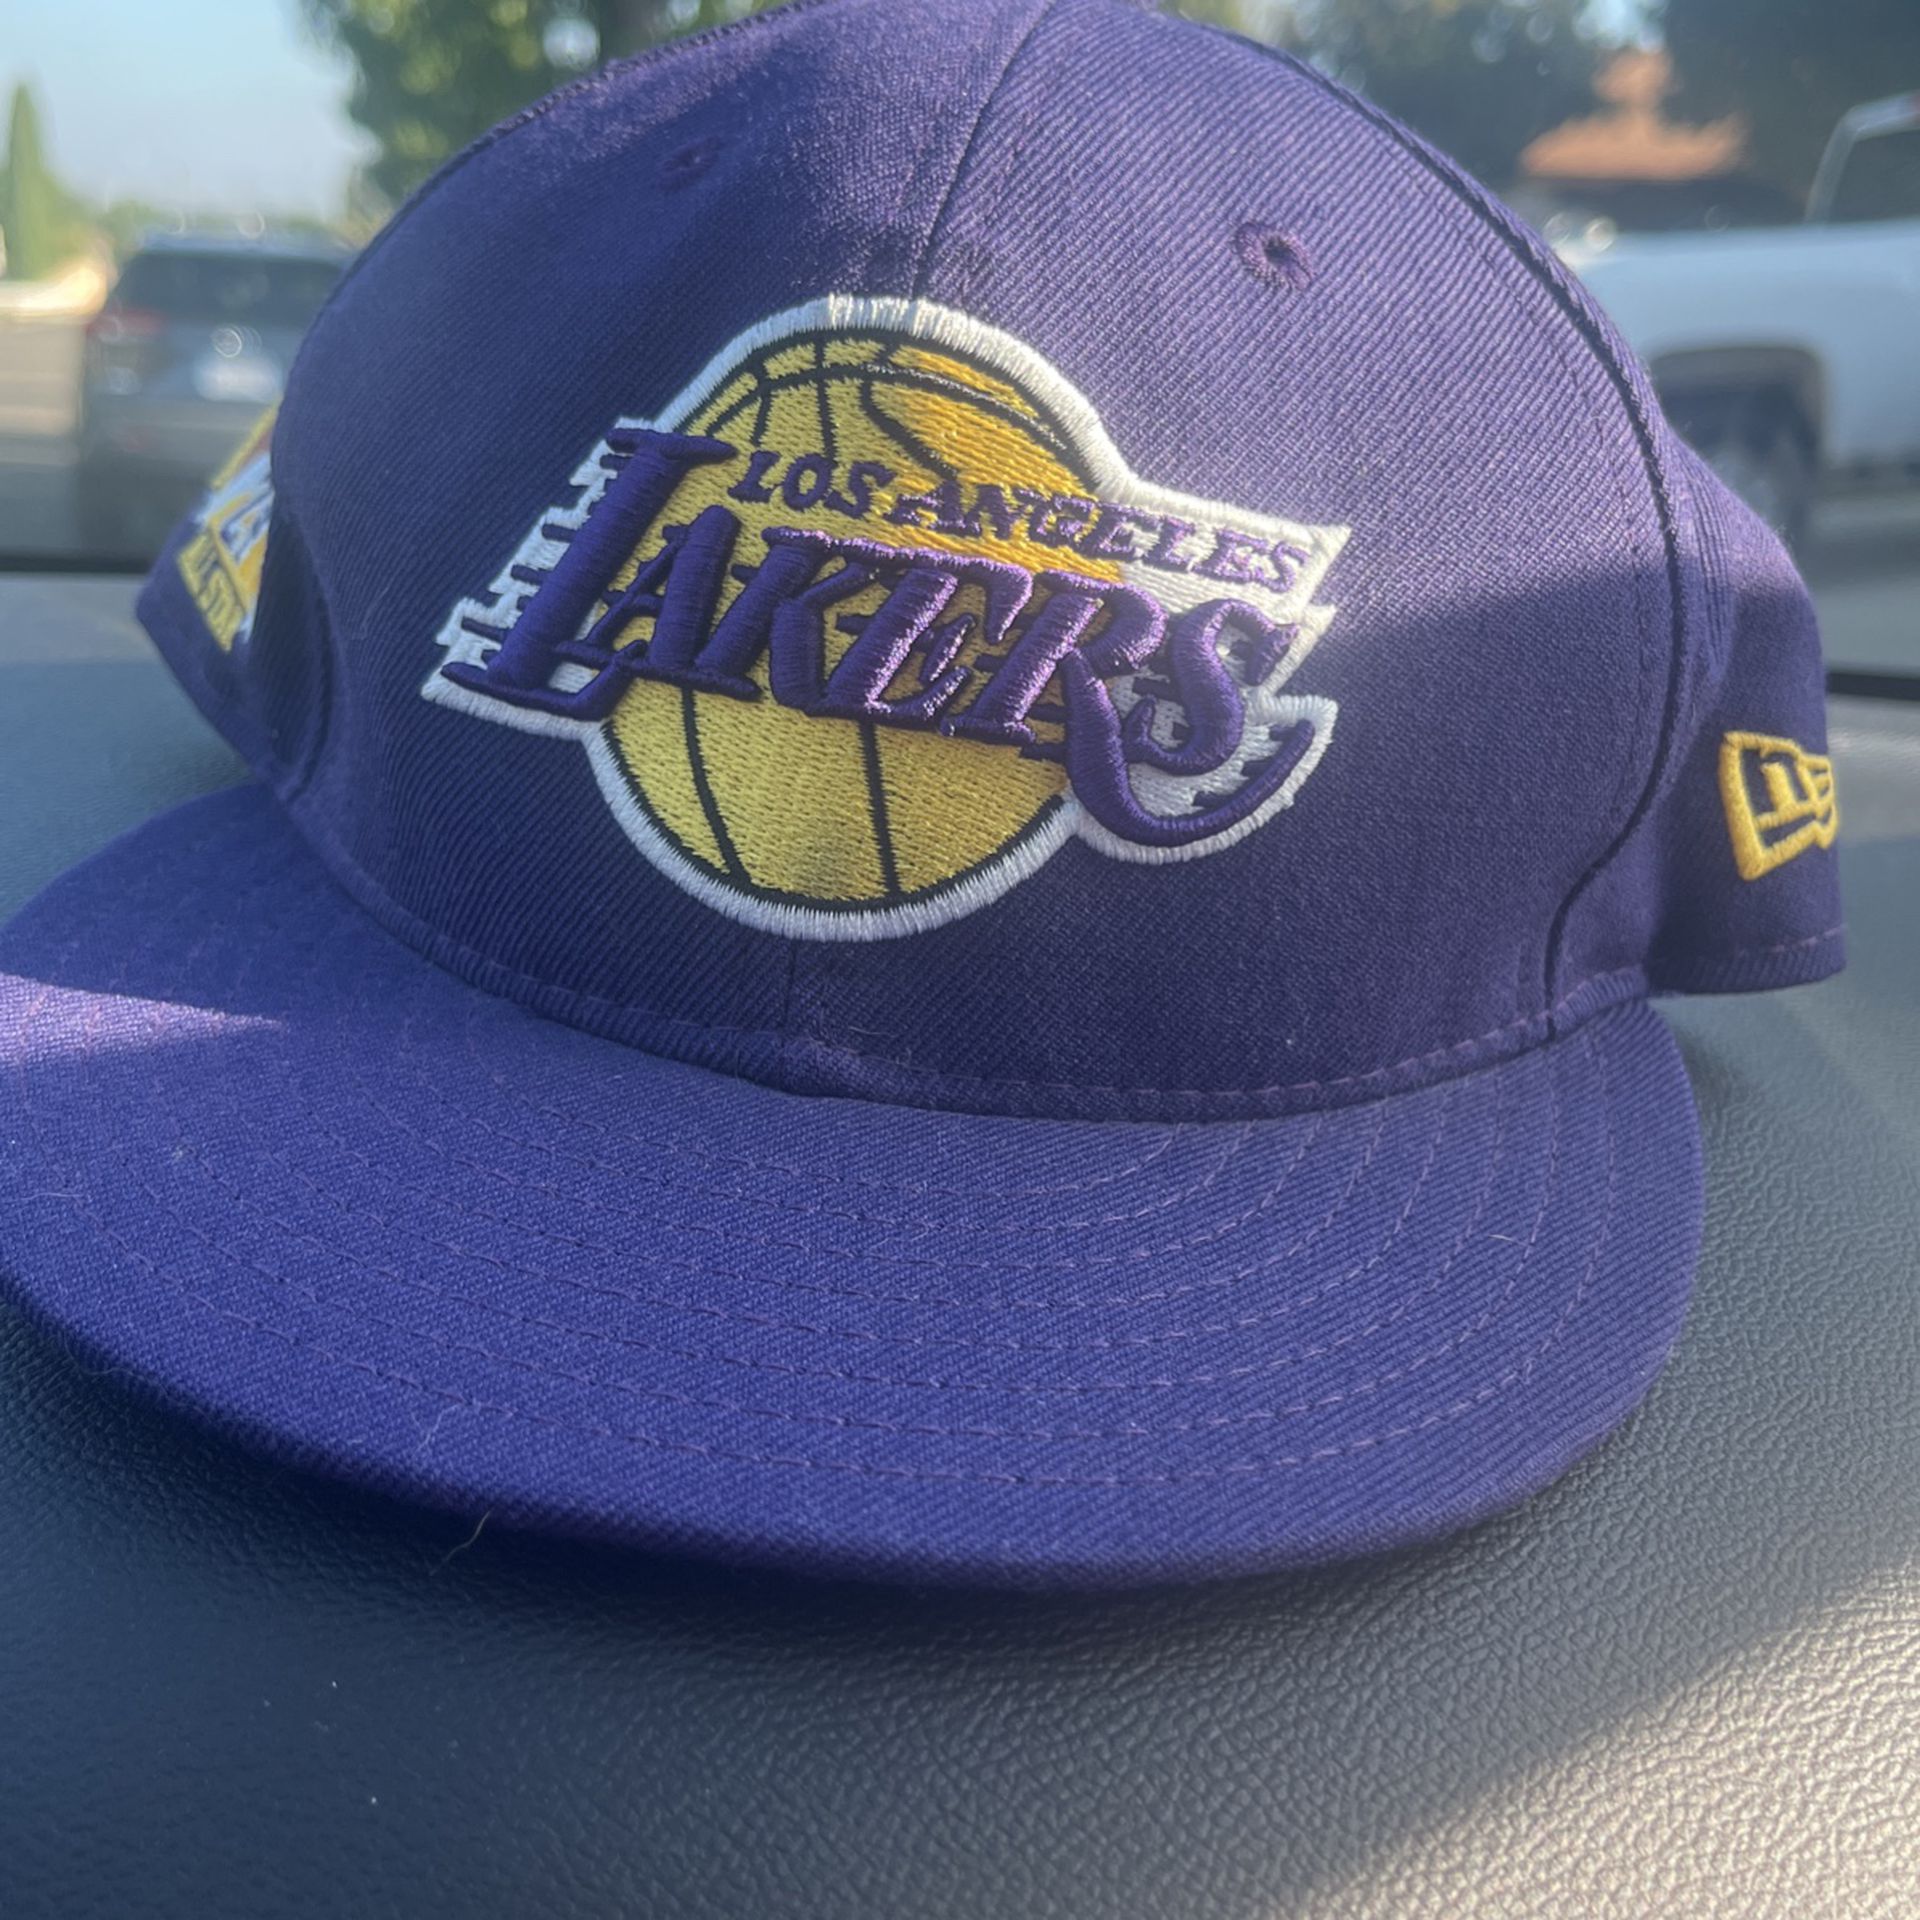 Kobe Bryant hat for Sale in Riverside, CA - OfferUp